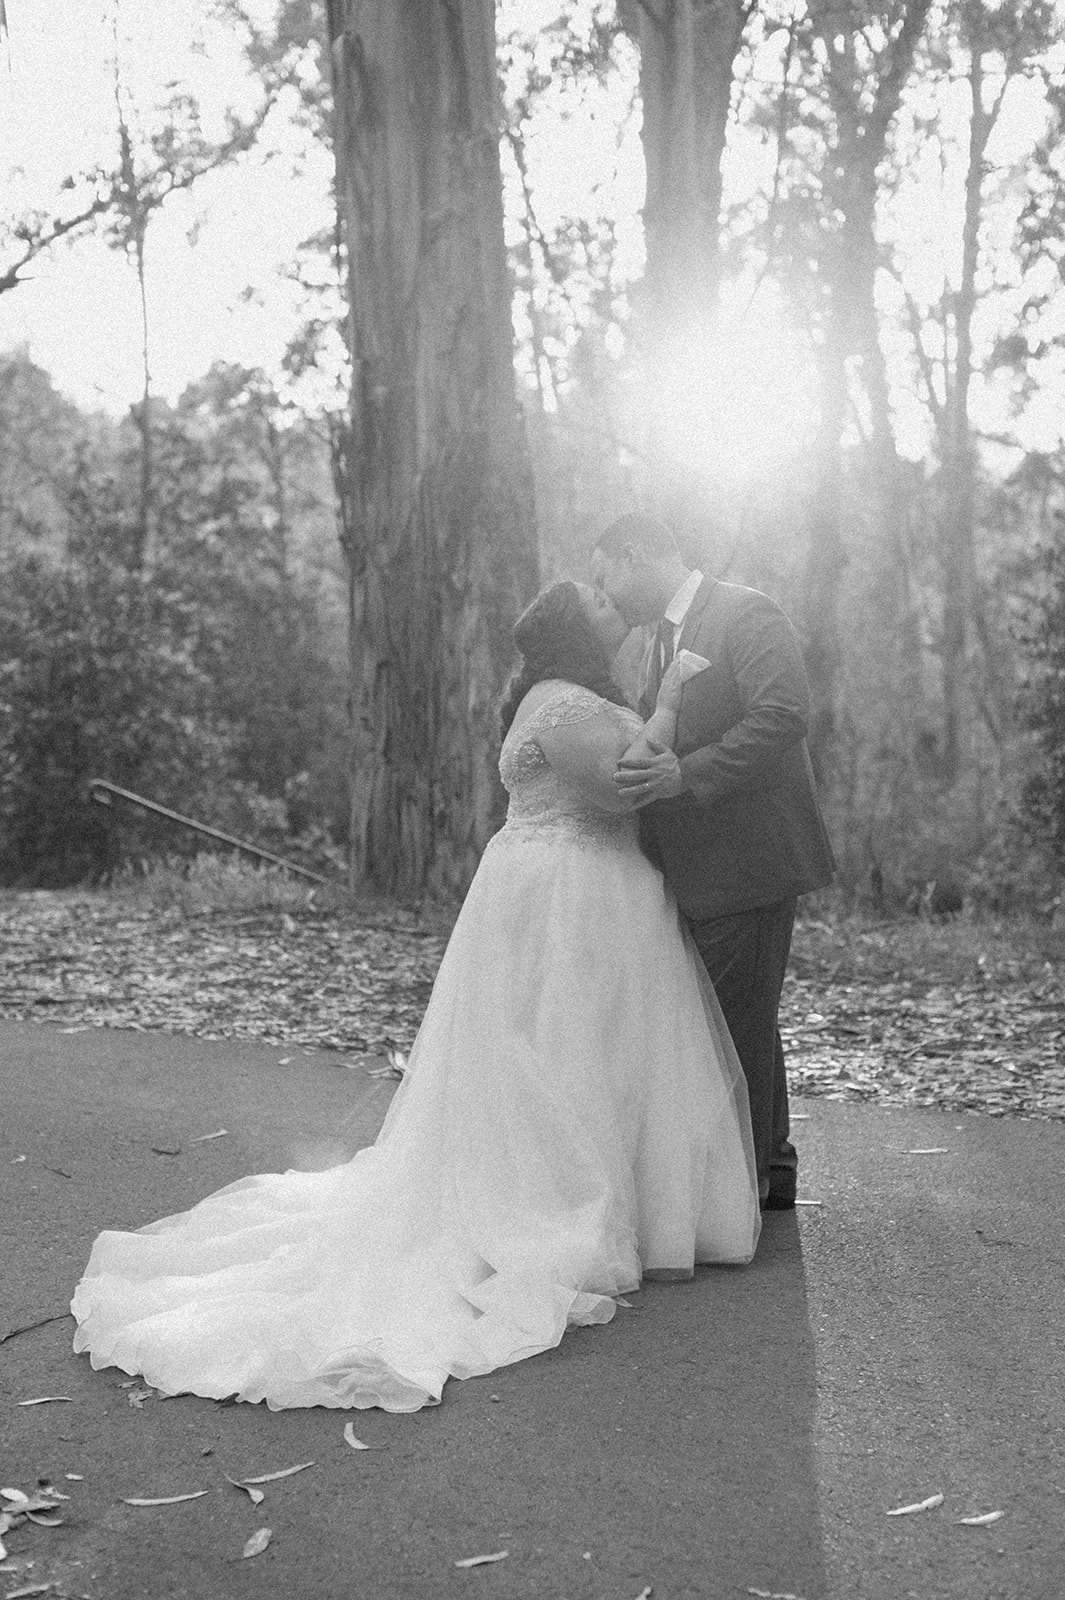 Sydney Jai Wedding Photographer - Bride and groom photos, Berkeley California wedding, black and white wedding photos